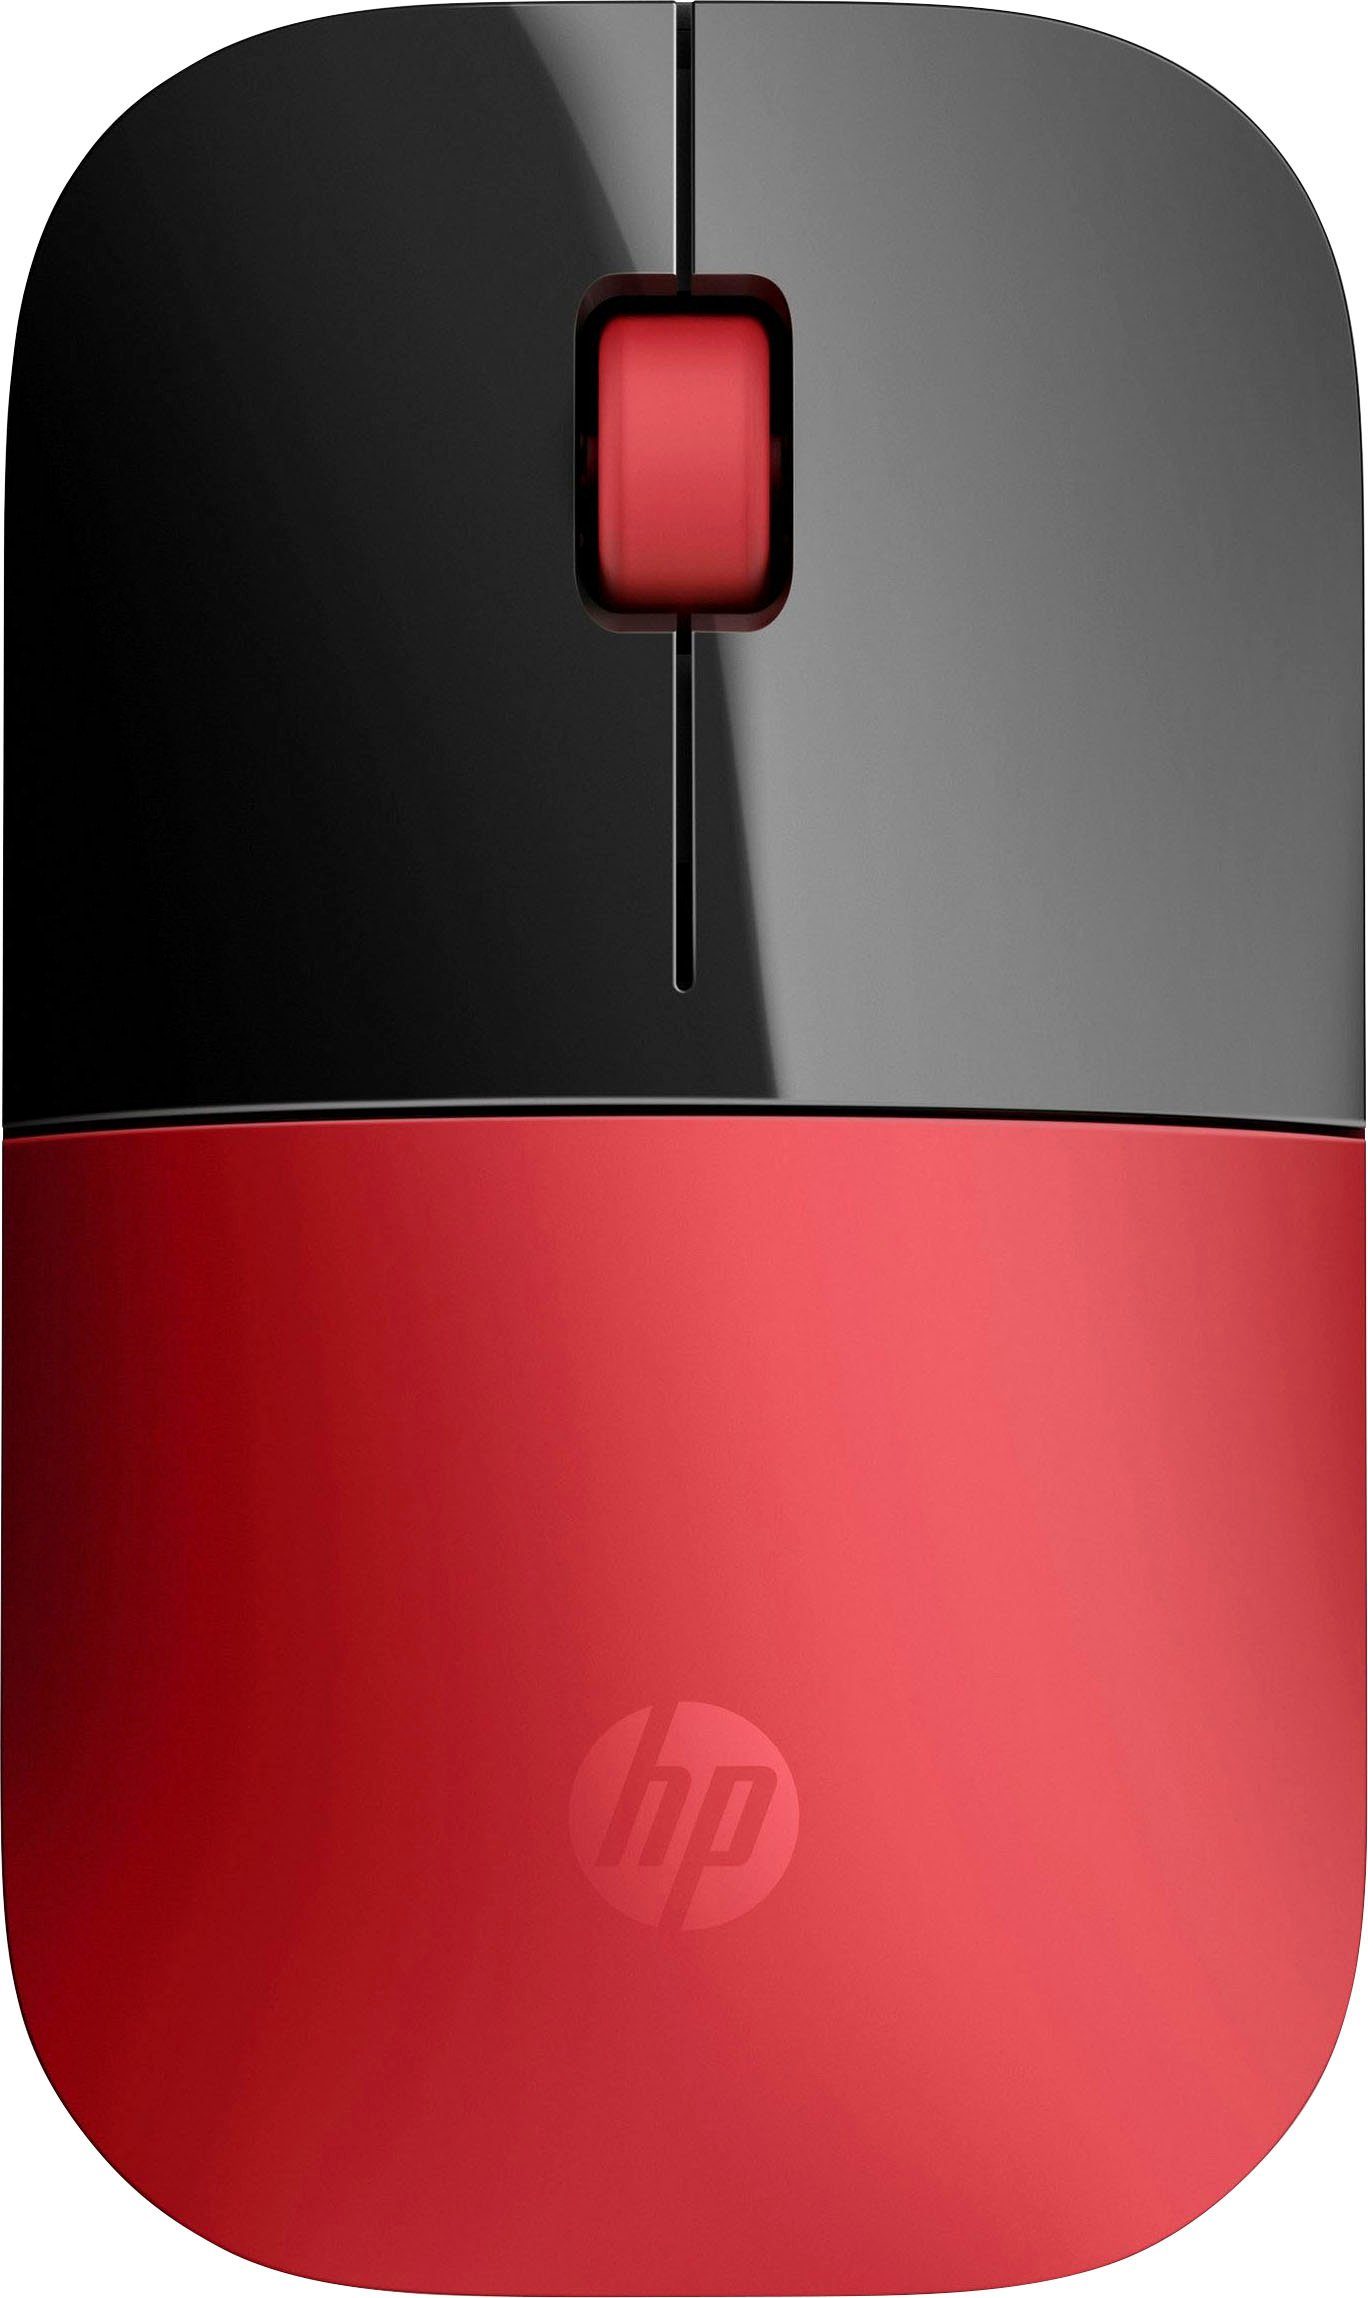 Maus Z3700 schwarz/rot HP